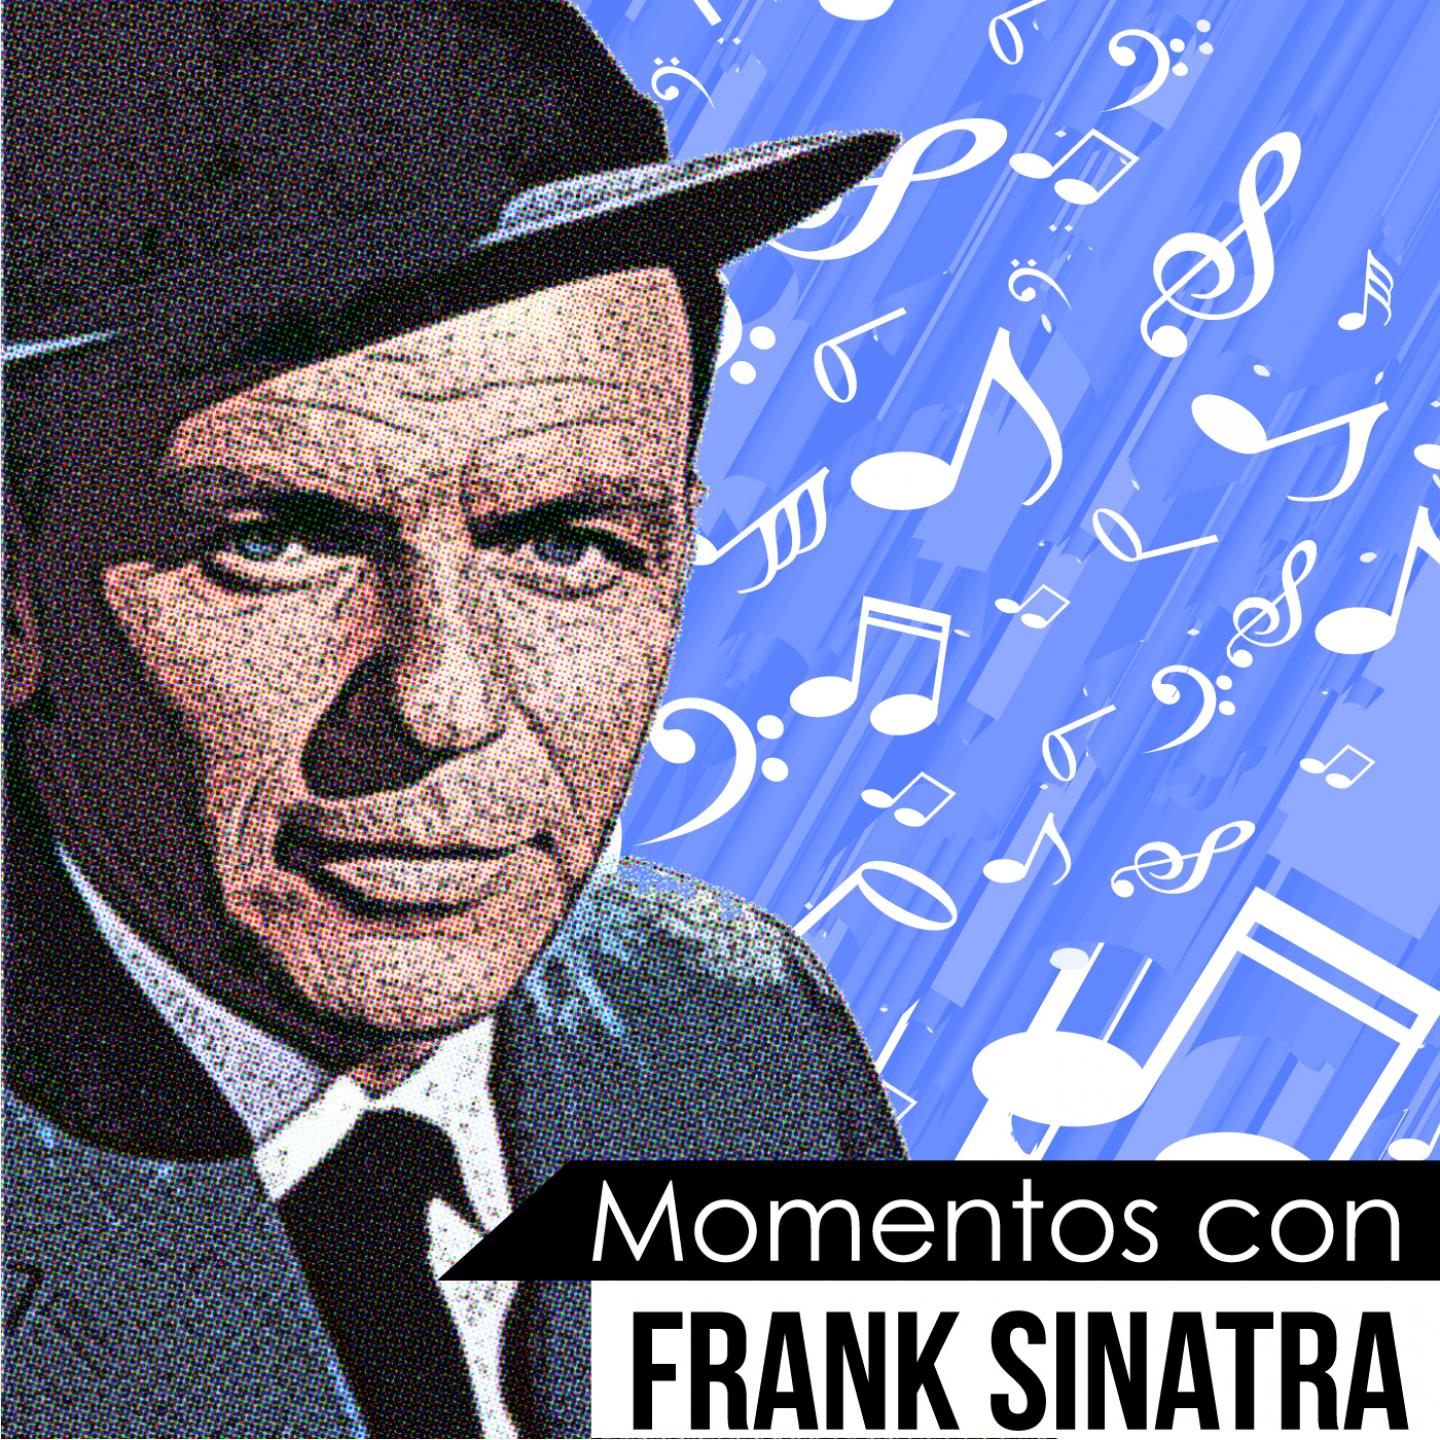 Something Stupid (Momentos Con Frank Sinatra)